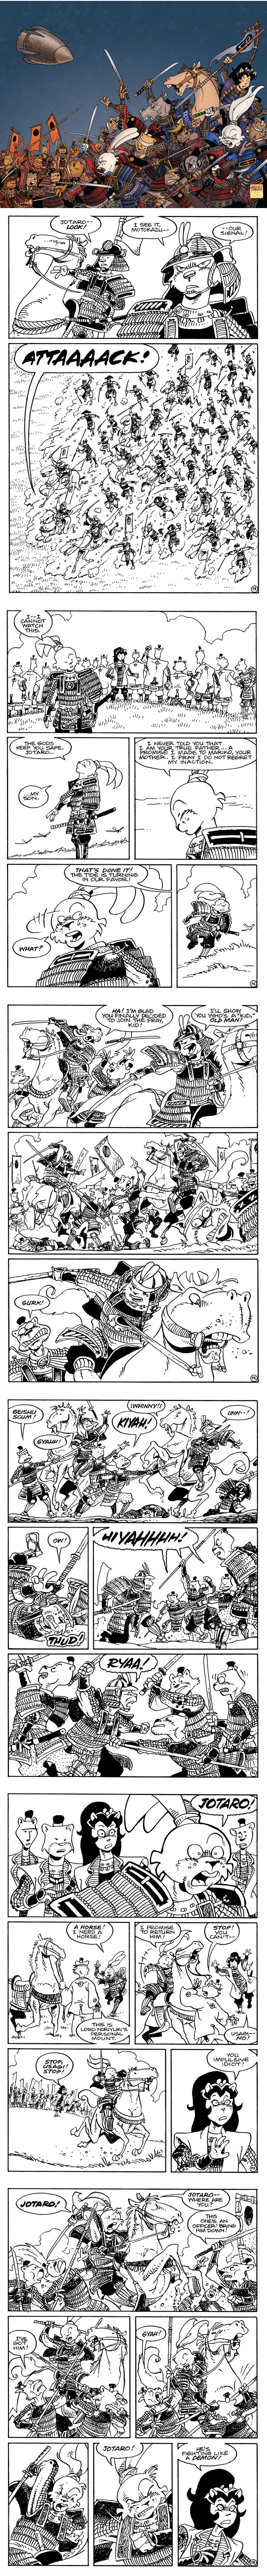 Stan Sakai's Usagi Yojimbo: Senso #1 - Dark Horse Comics